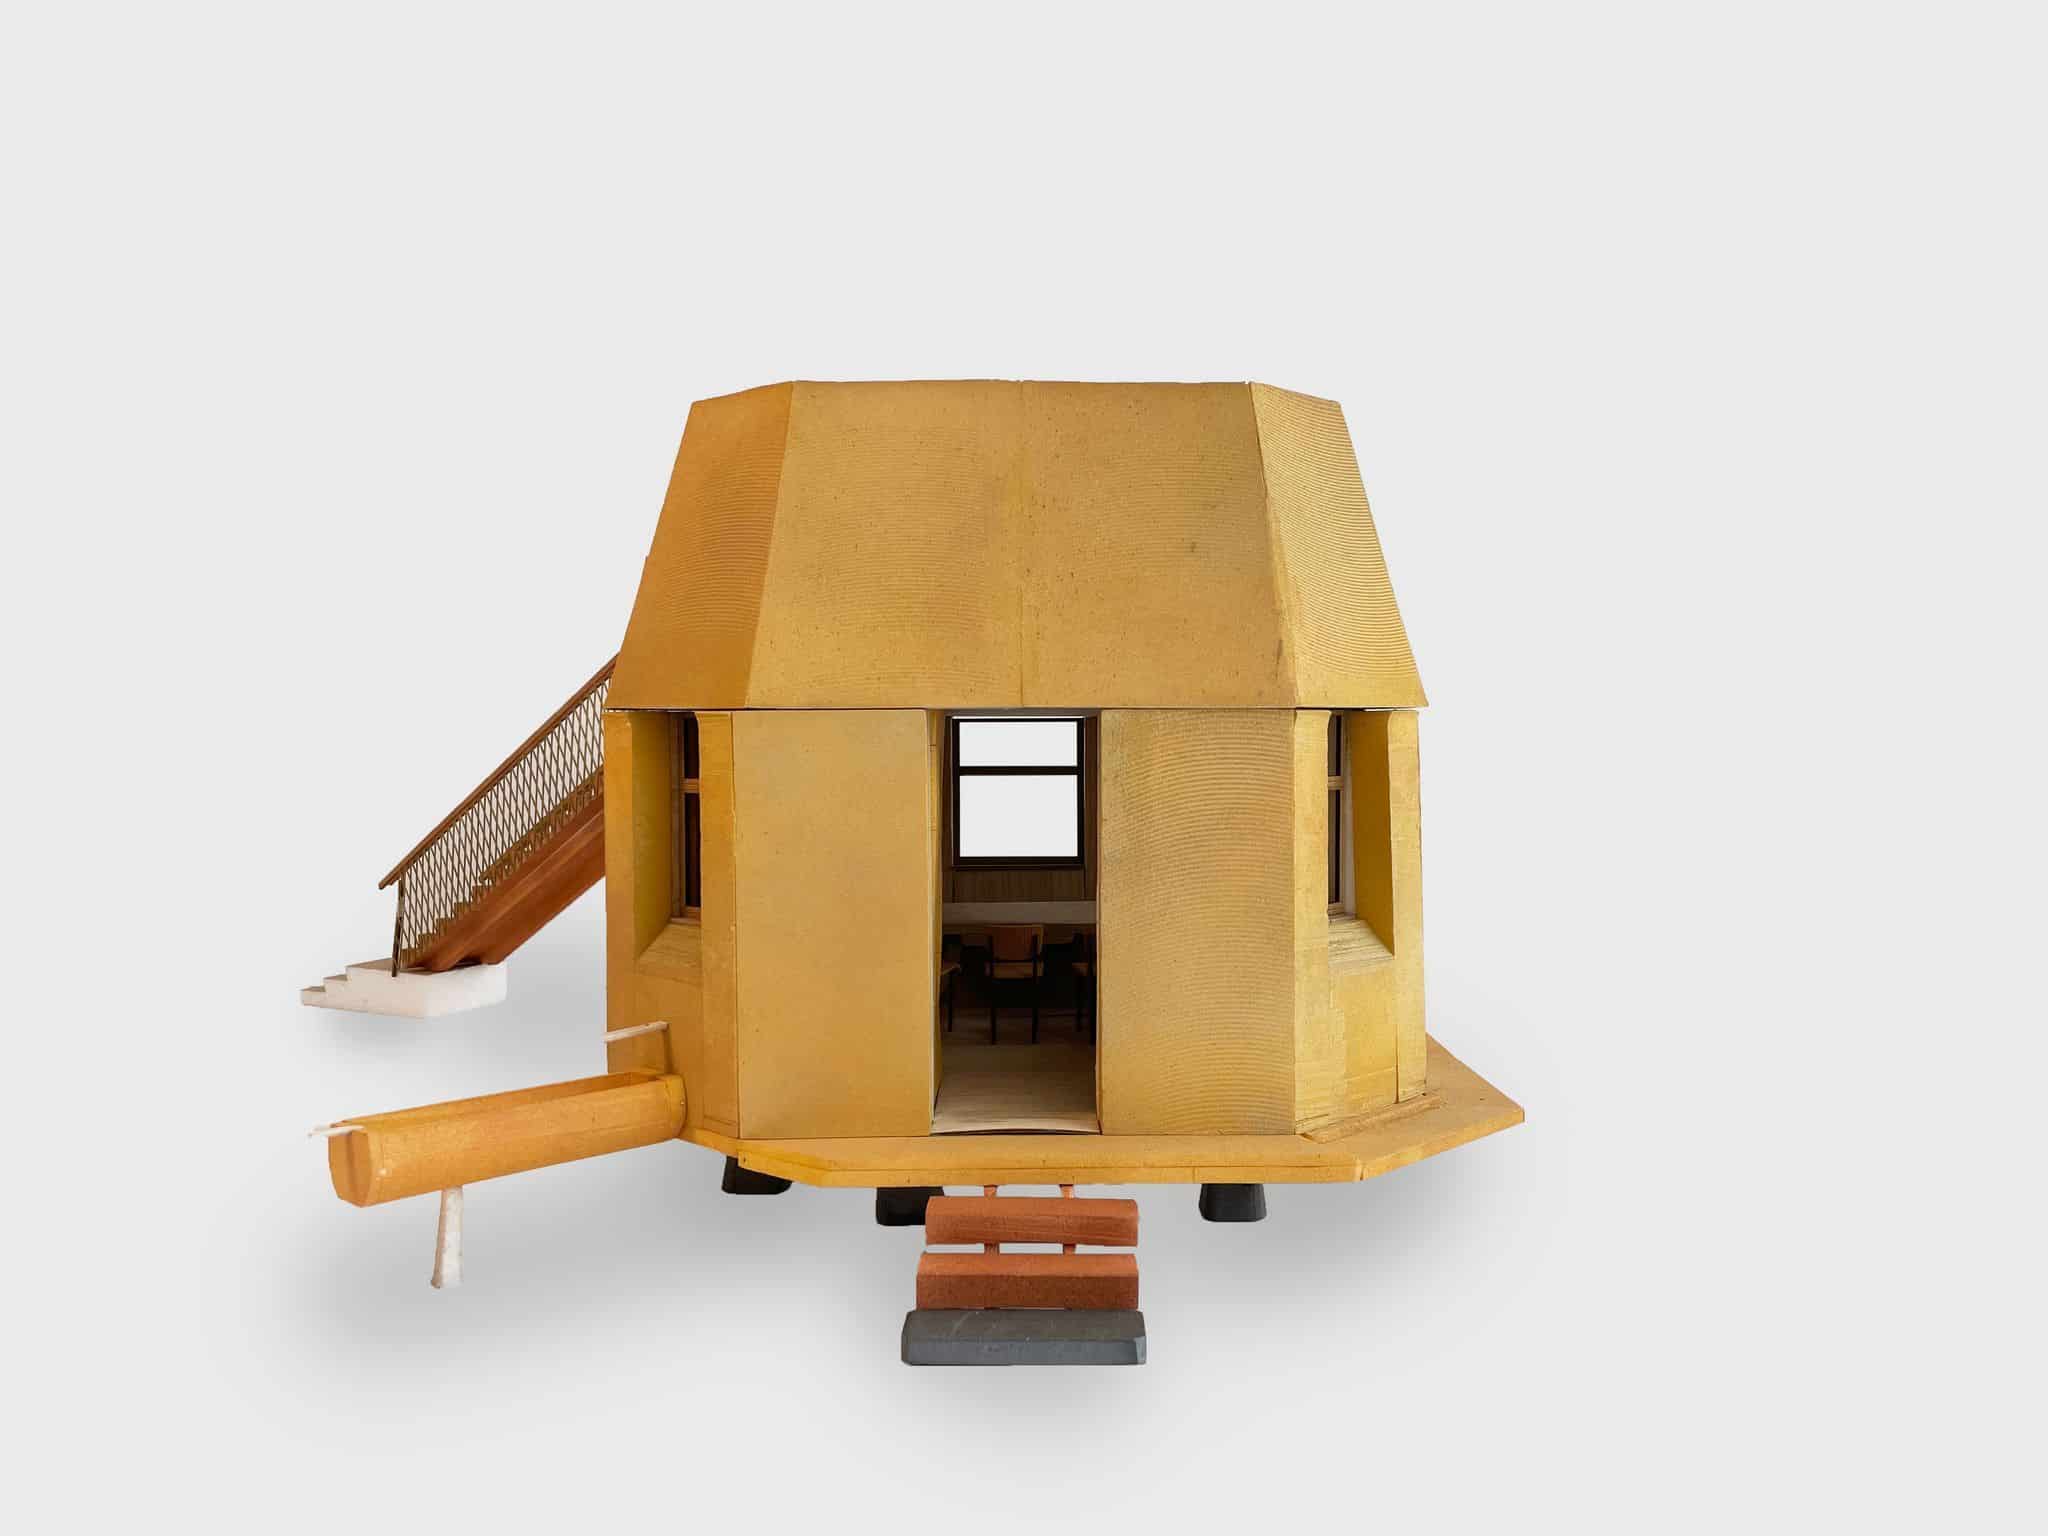 Projektmodel, Maßstab 1:10 © Atelier Tsuyoshi Tane Architects, Paris